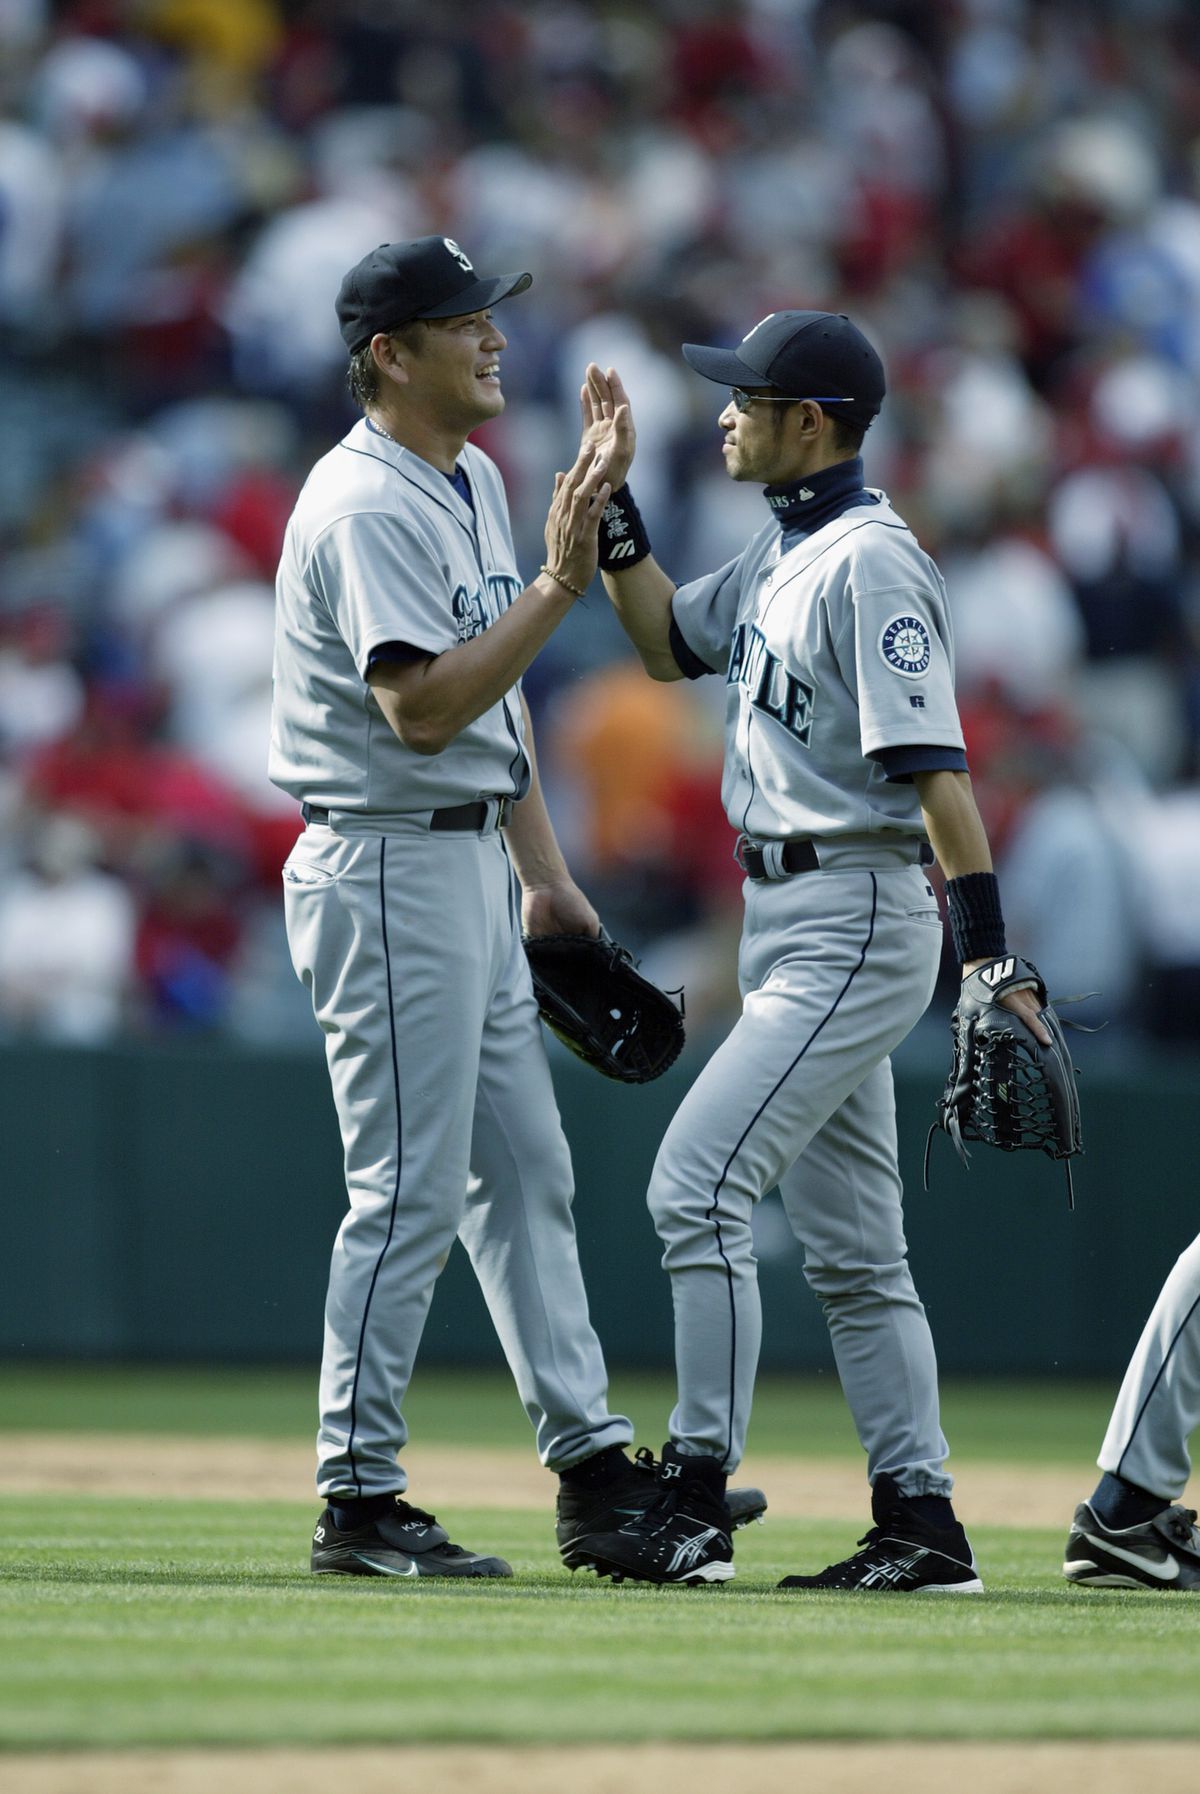 Sasaki receives a high five from Ichiro